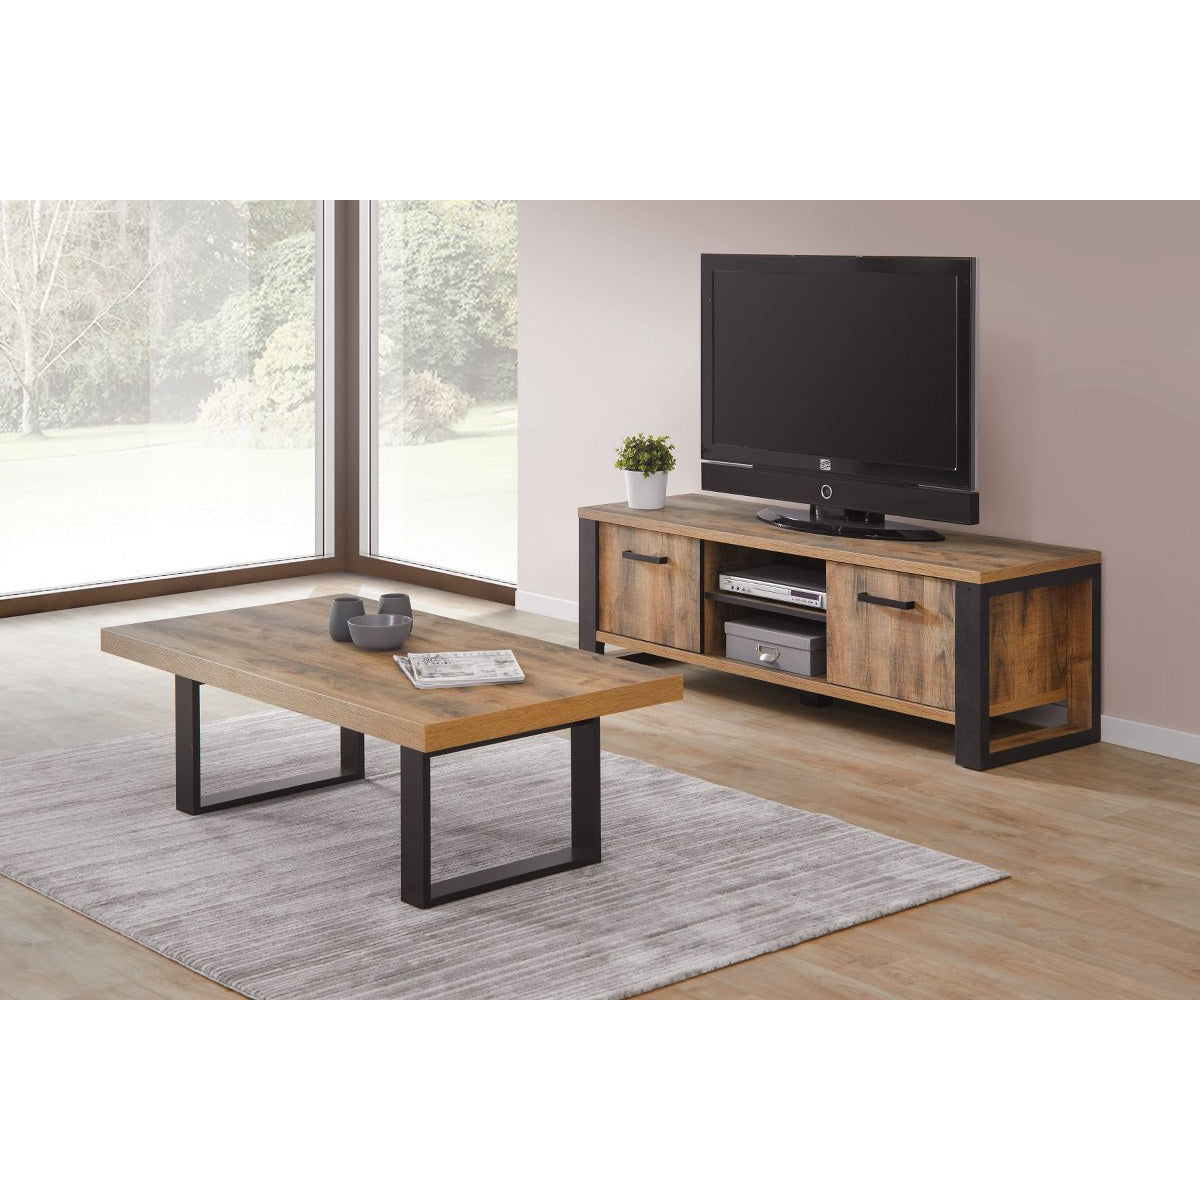 Dresser | Furniture series tremolo | brown, black | 225x48x